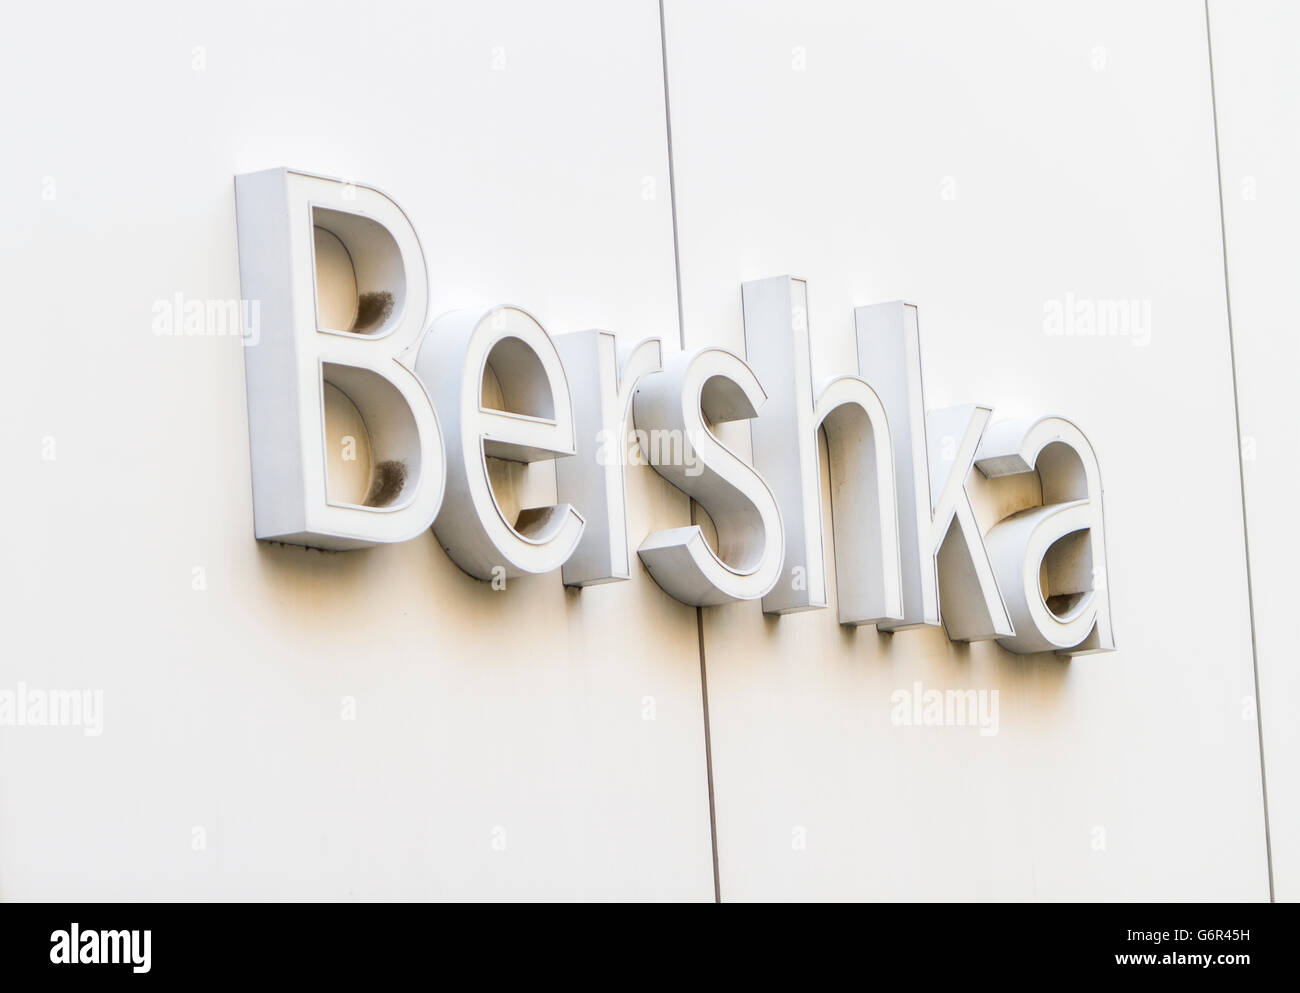 Bershka logo hi-res stock photography and images - Alamy